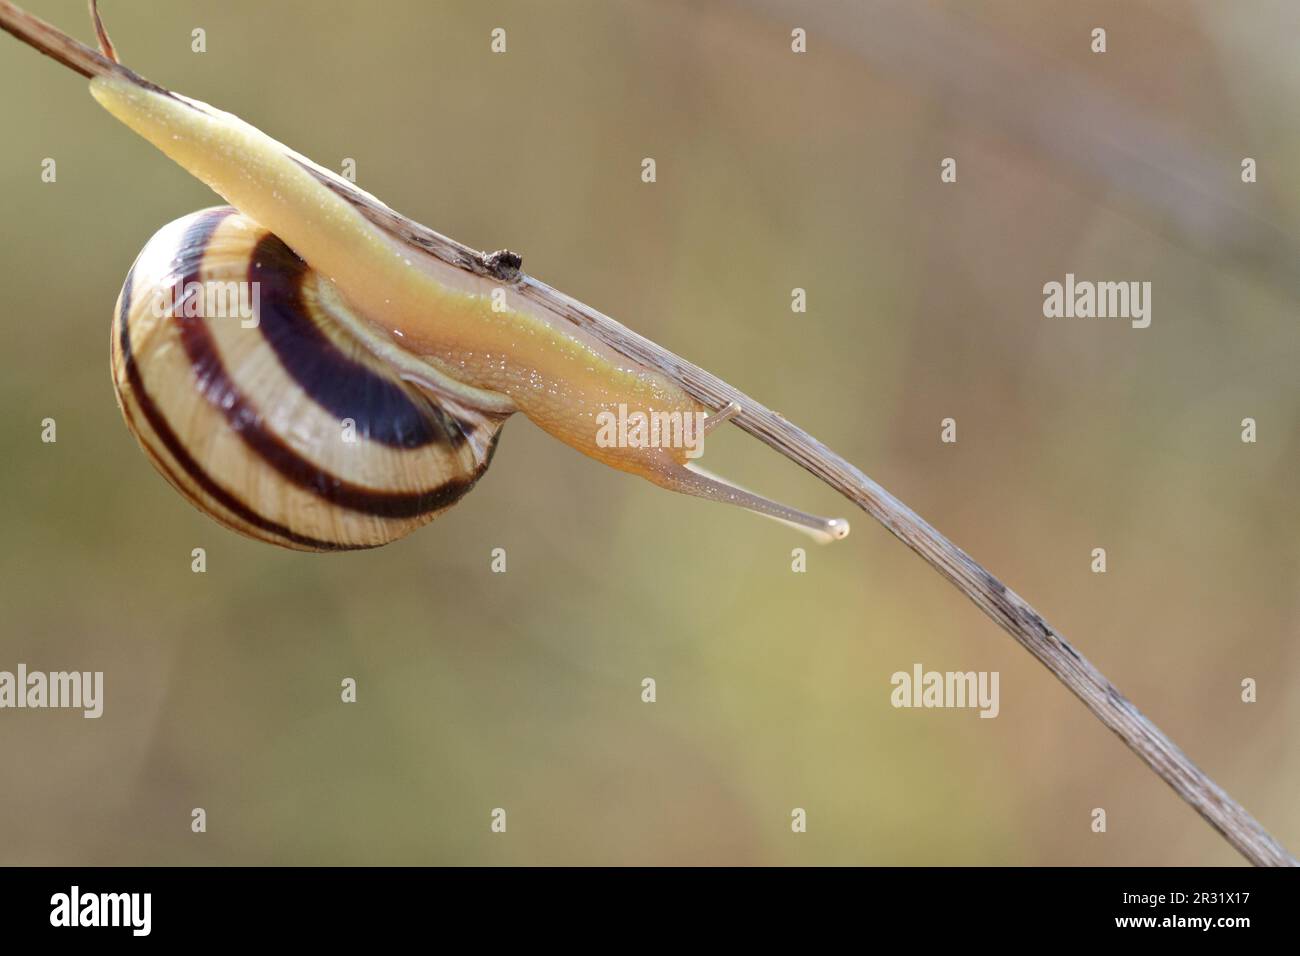 Caucasotachea vindobonensis snail climbing a branch, blurred background. Stock Photo